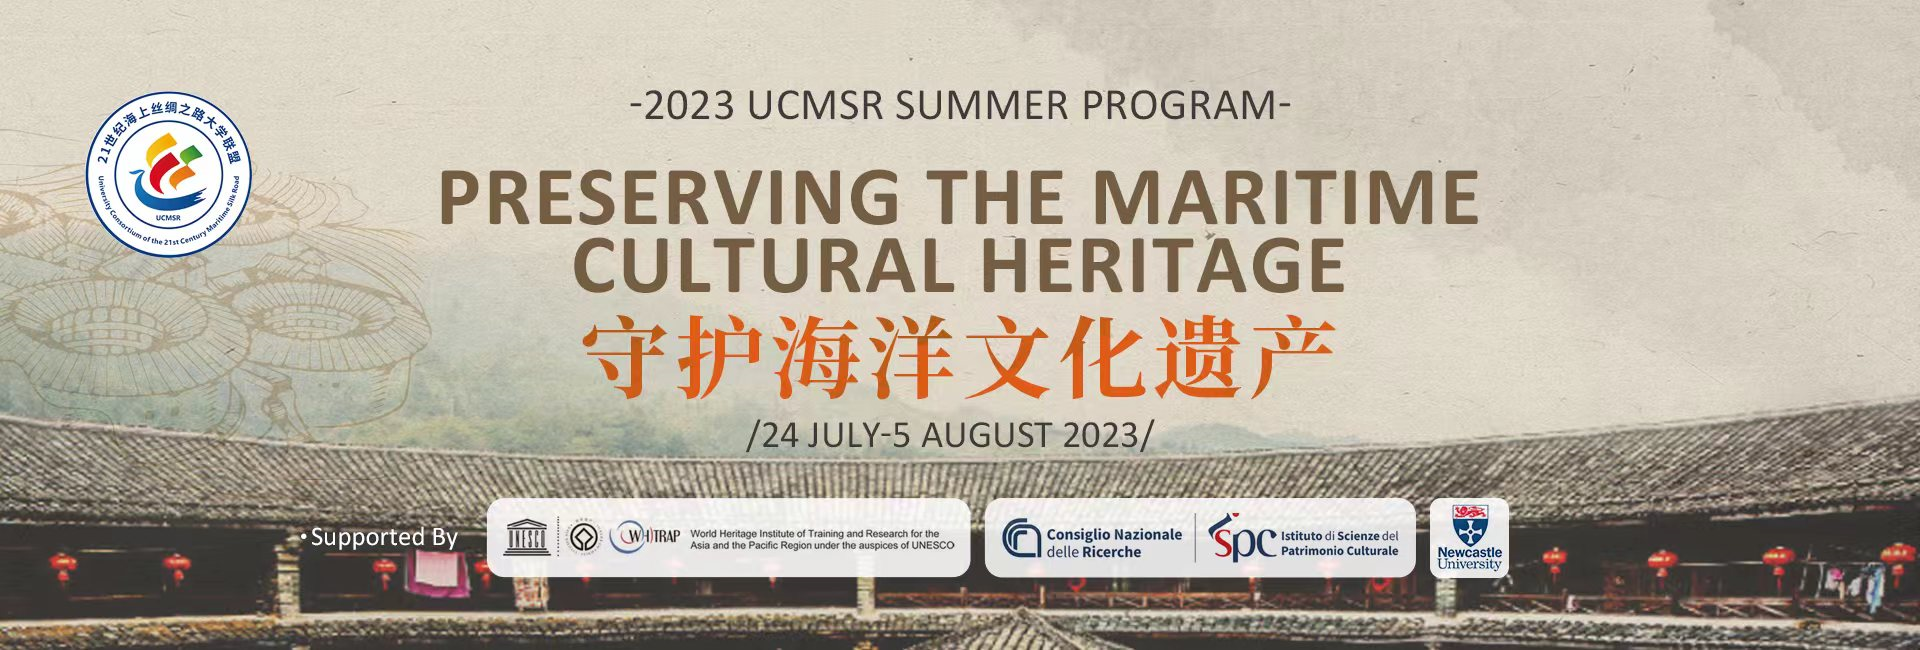 2023 UCMSR Summer Program